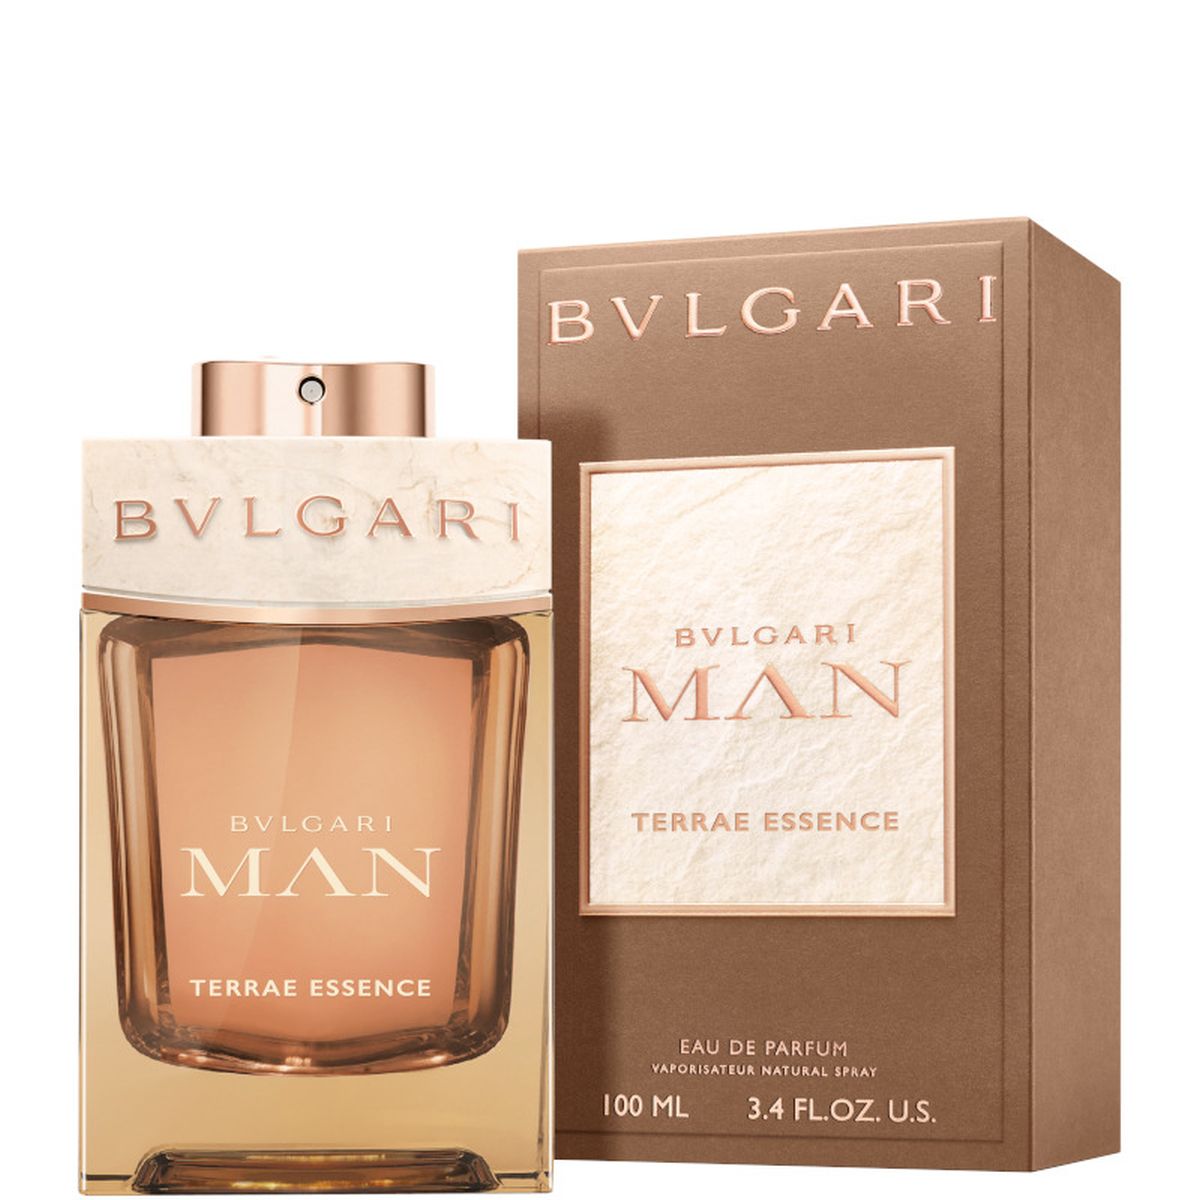 Bulgari Man Terrae Essence - Eau de Parfum. 100ml